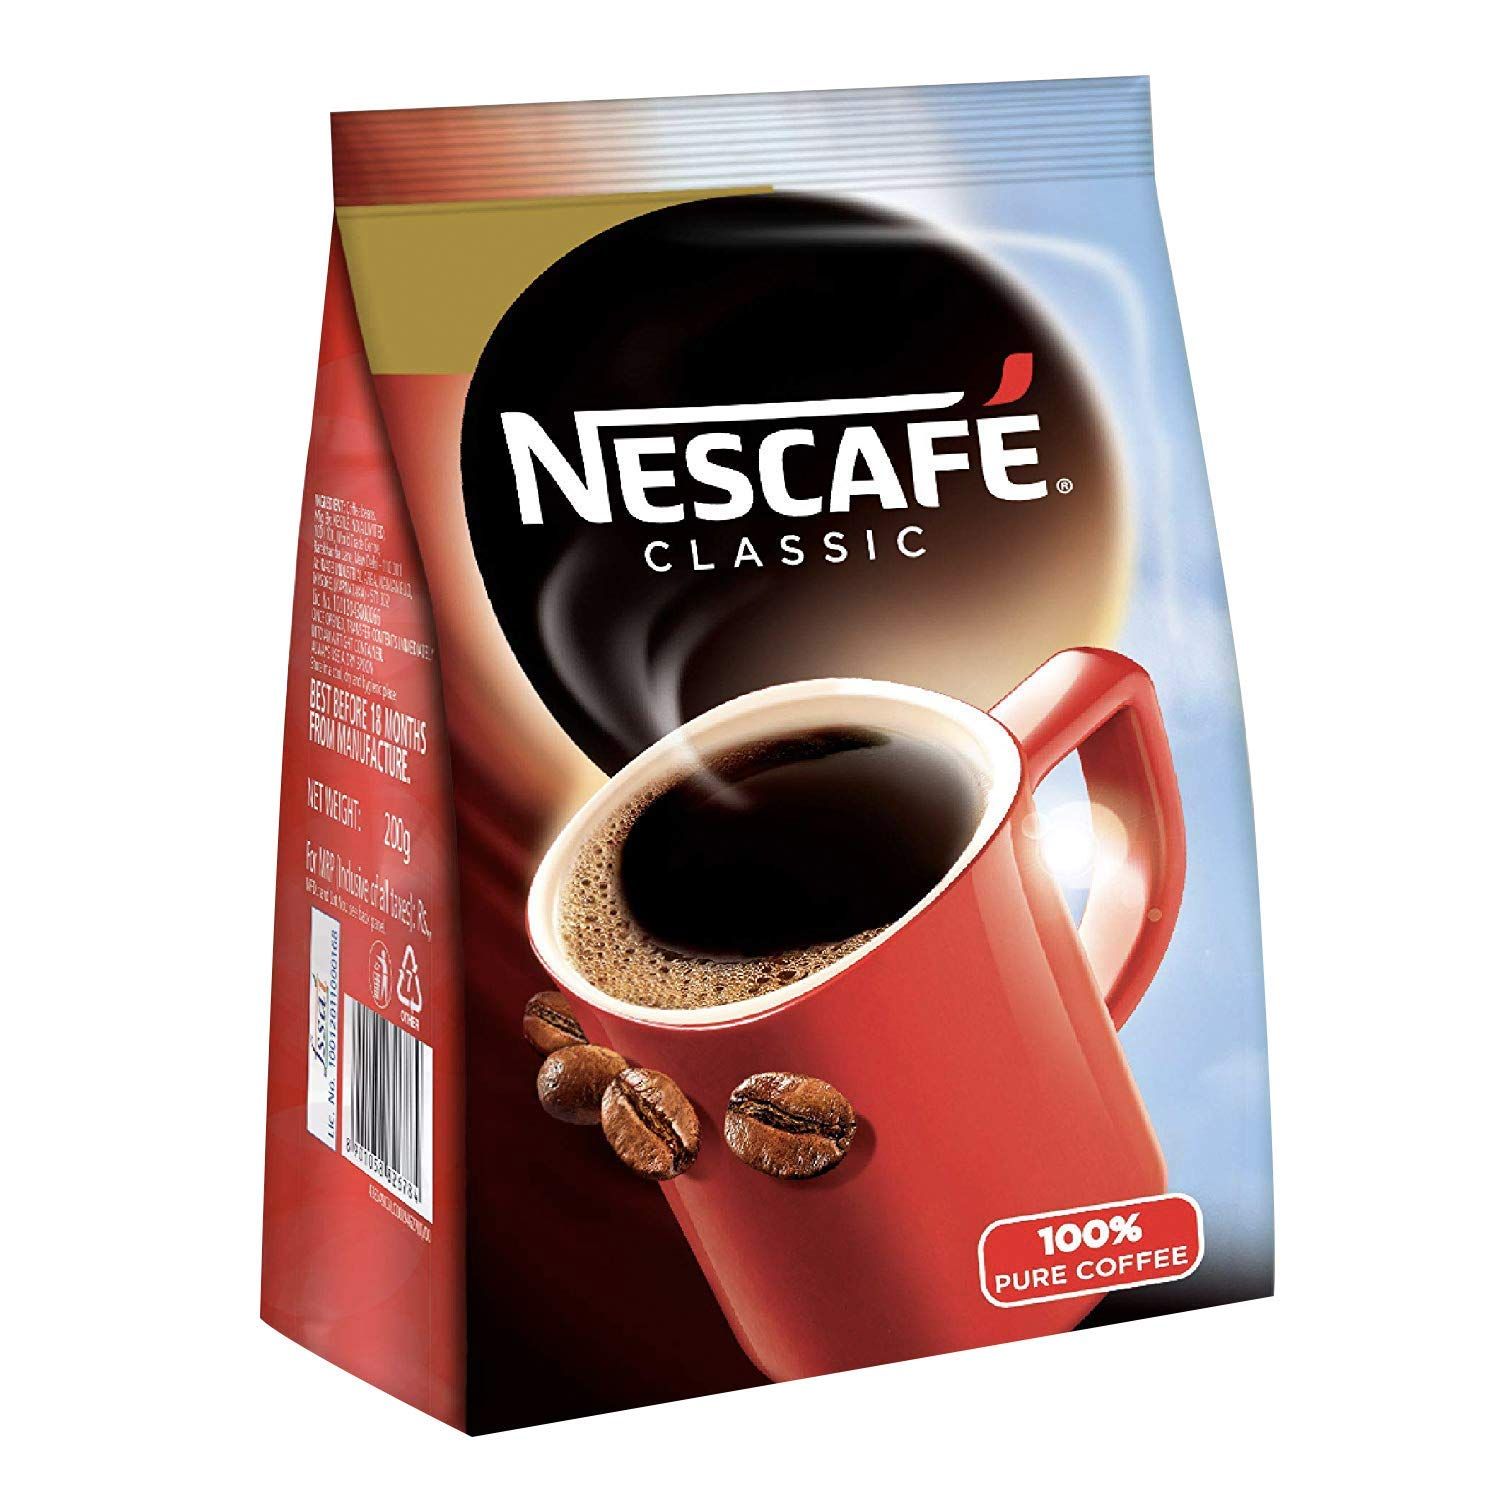 Nestle Classic Instant Coffee Image